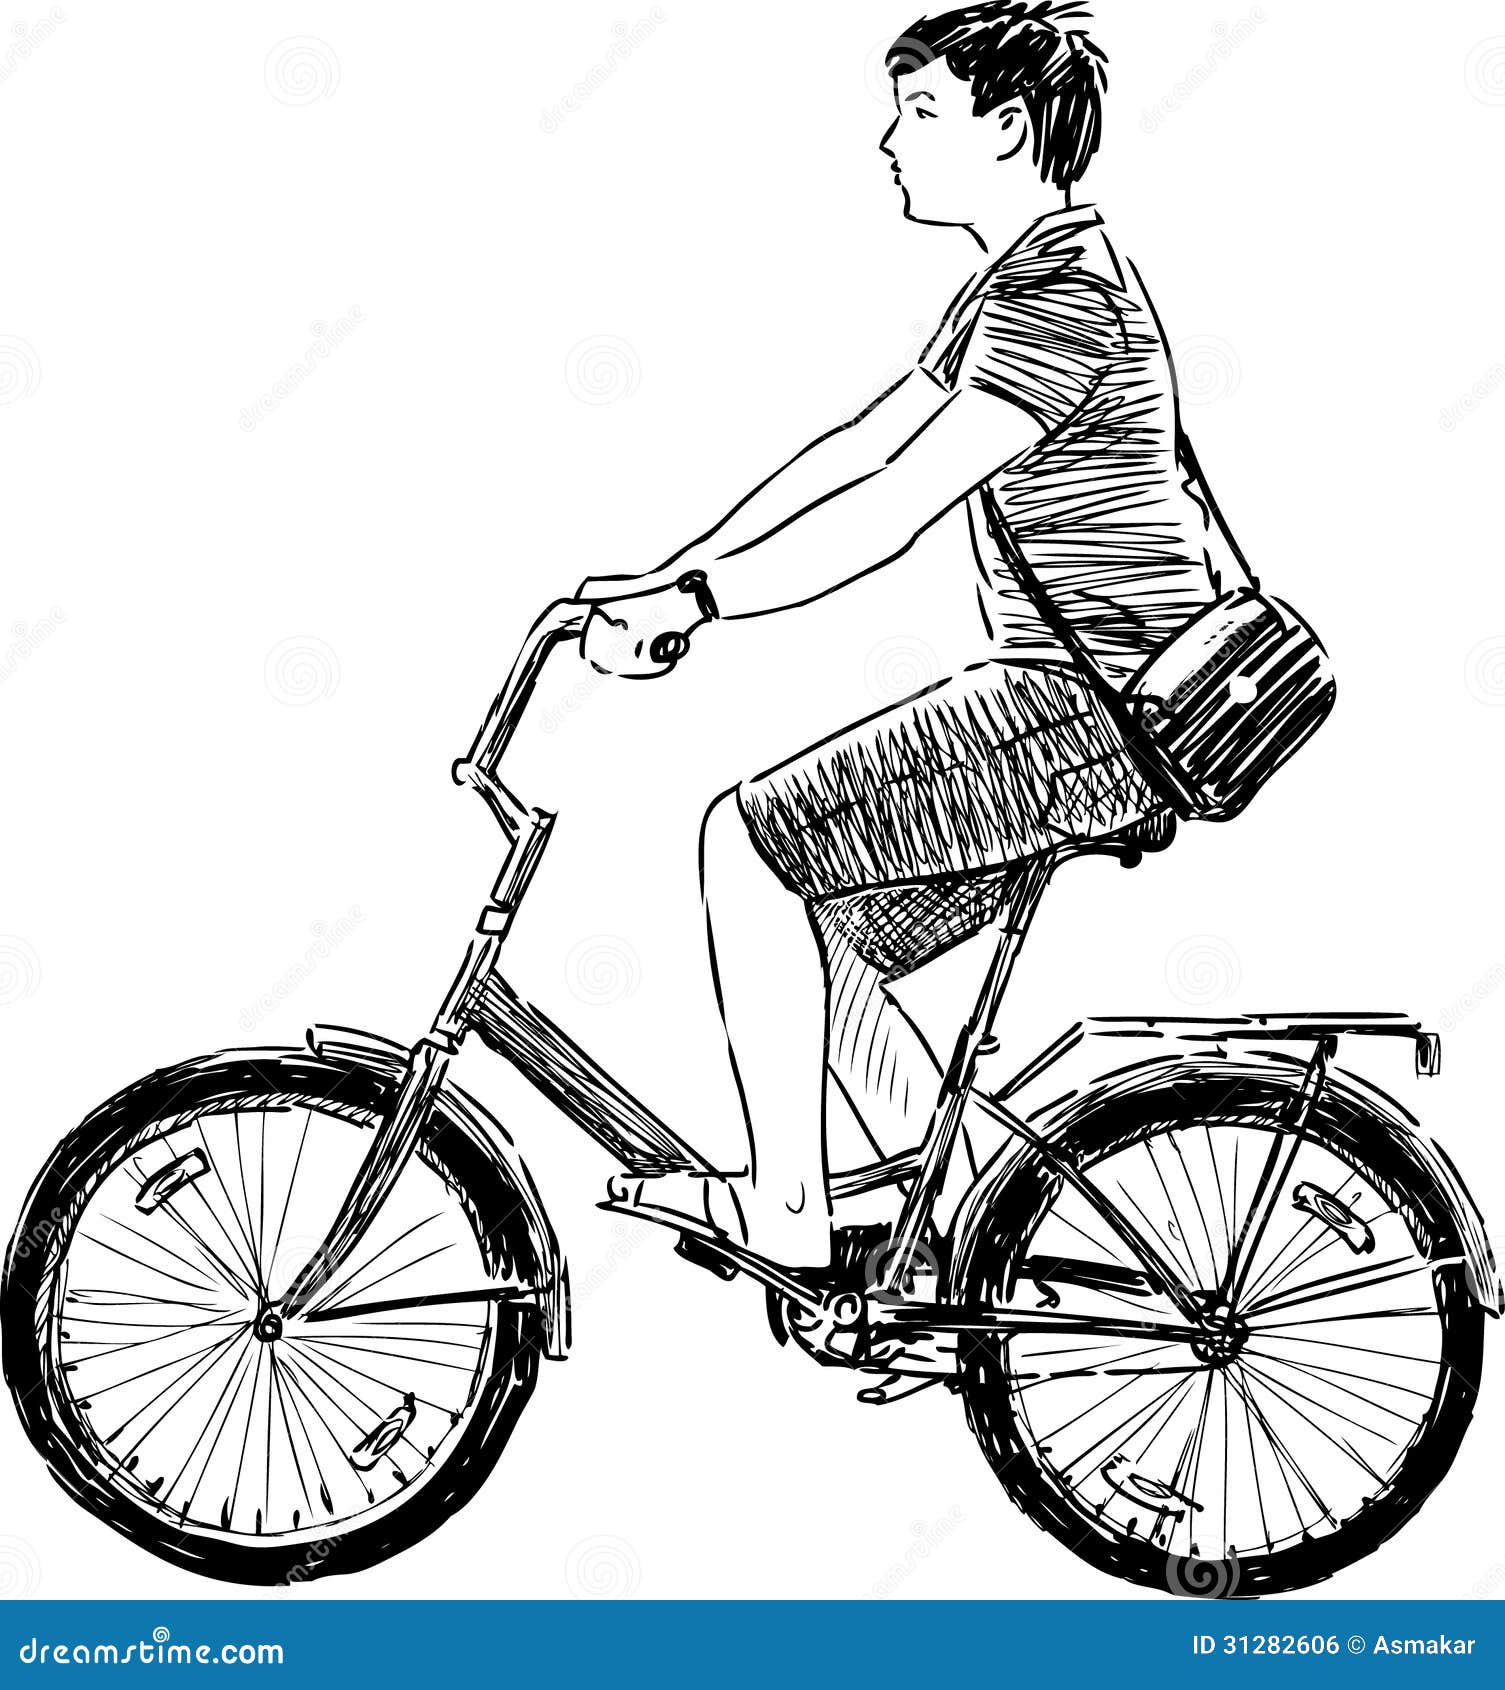 Зарисовка мальчика на велосипеде